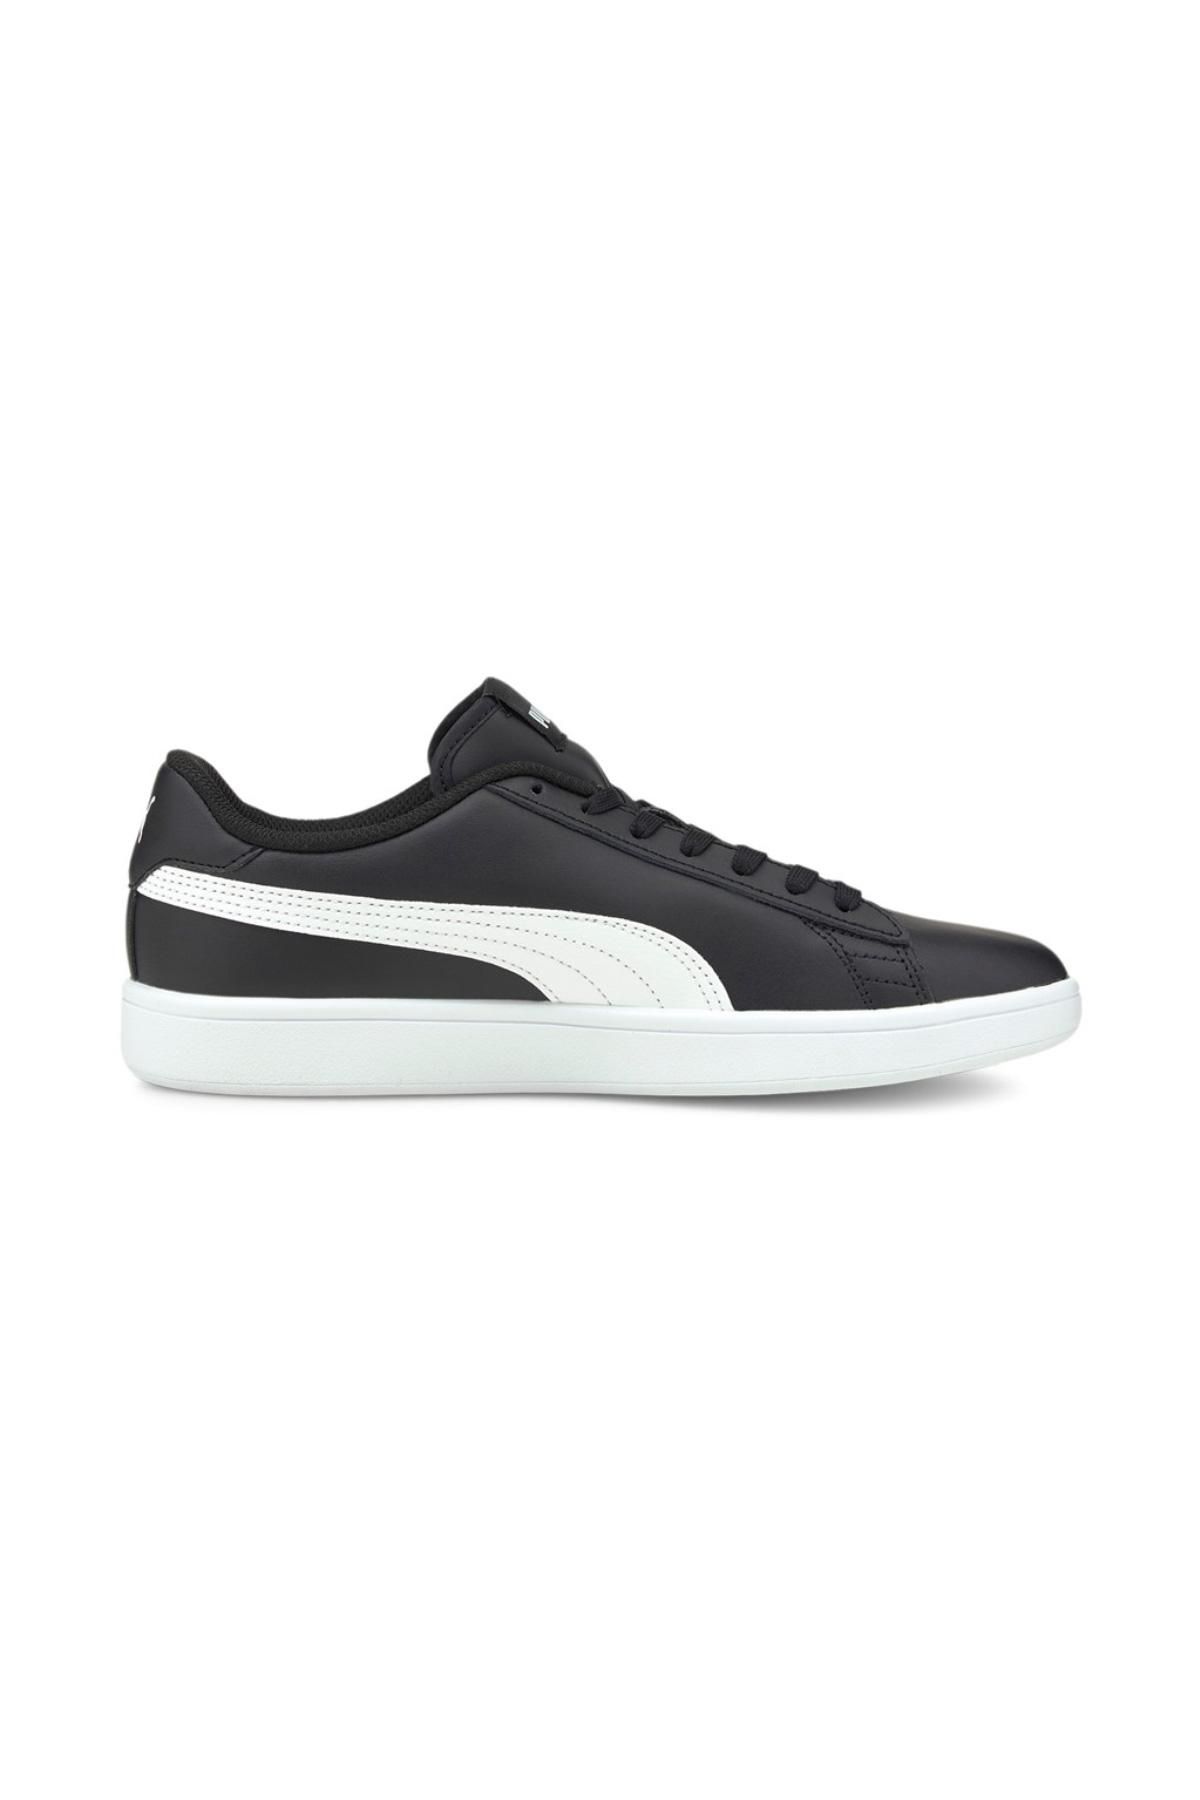 Puma Smash v2 L Shoes LifeStyle Sneakers Black 365215-06 US 4-12